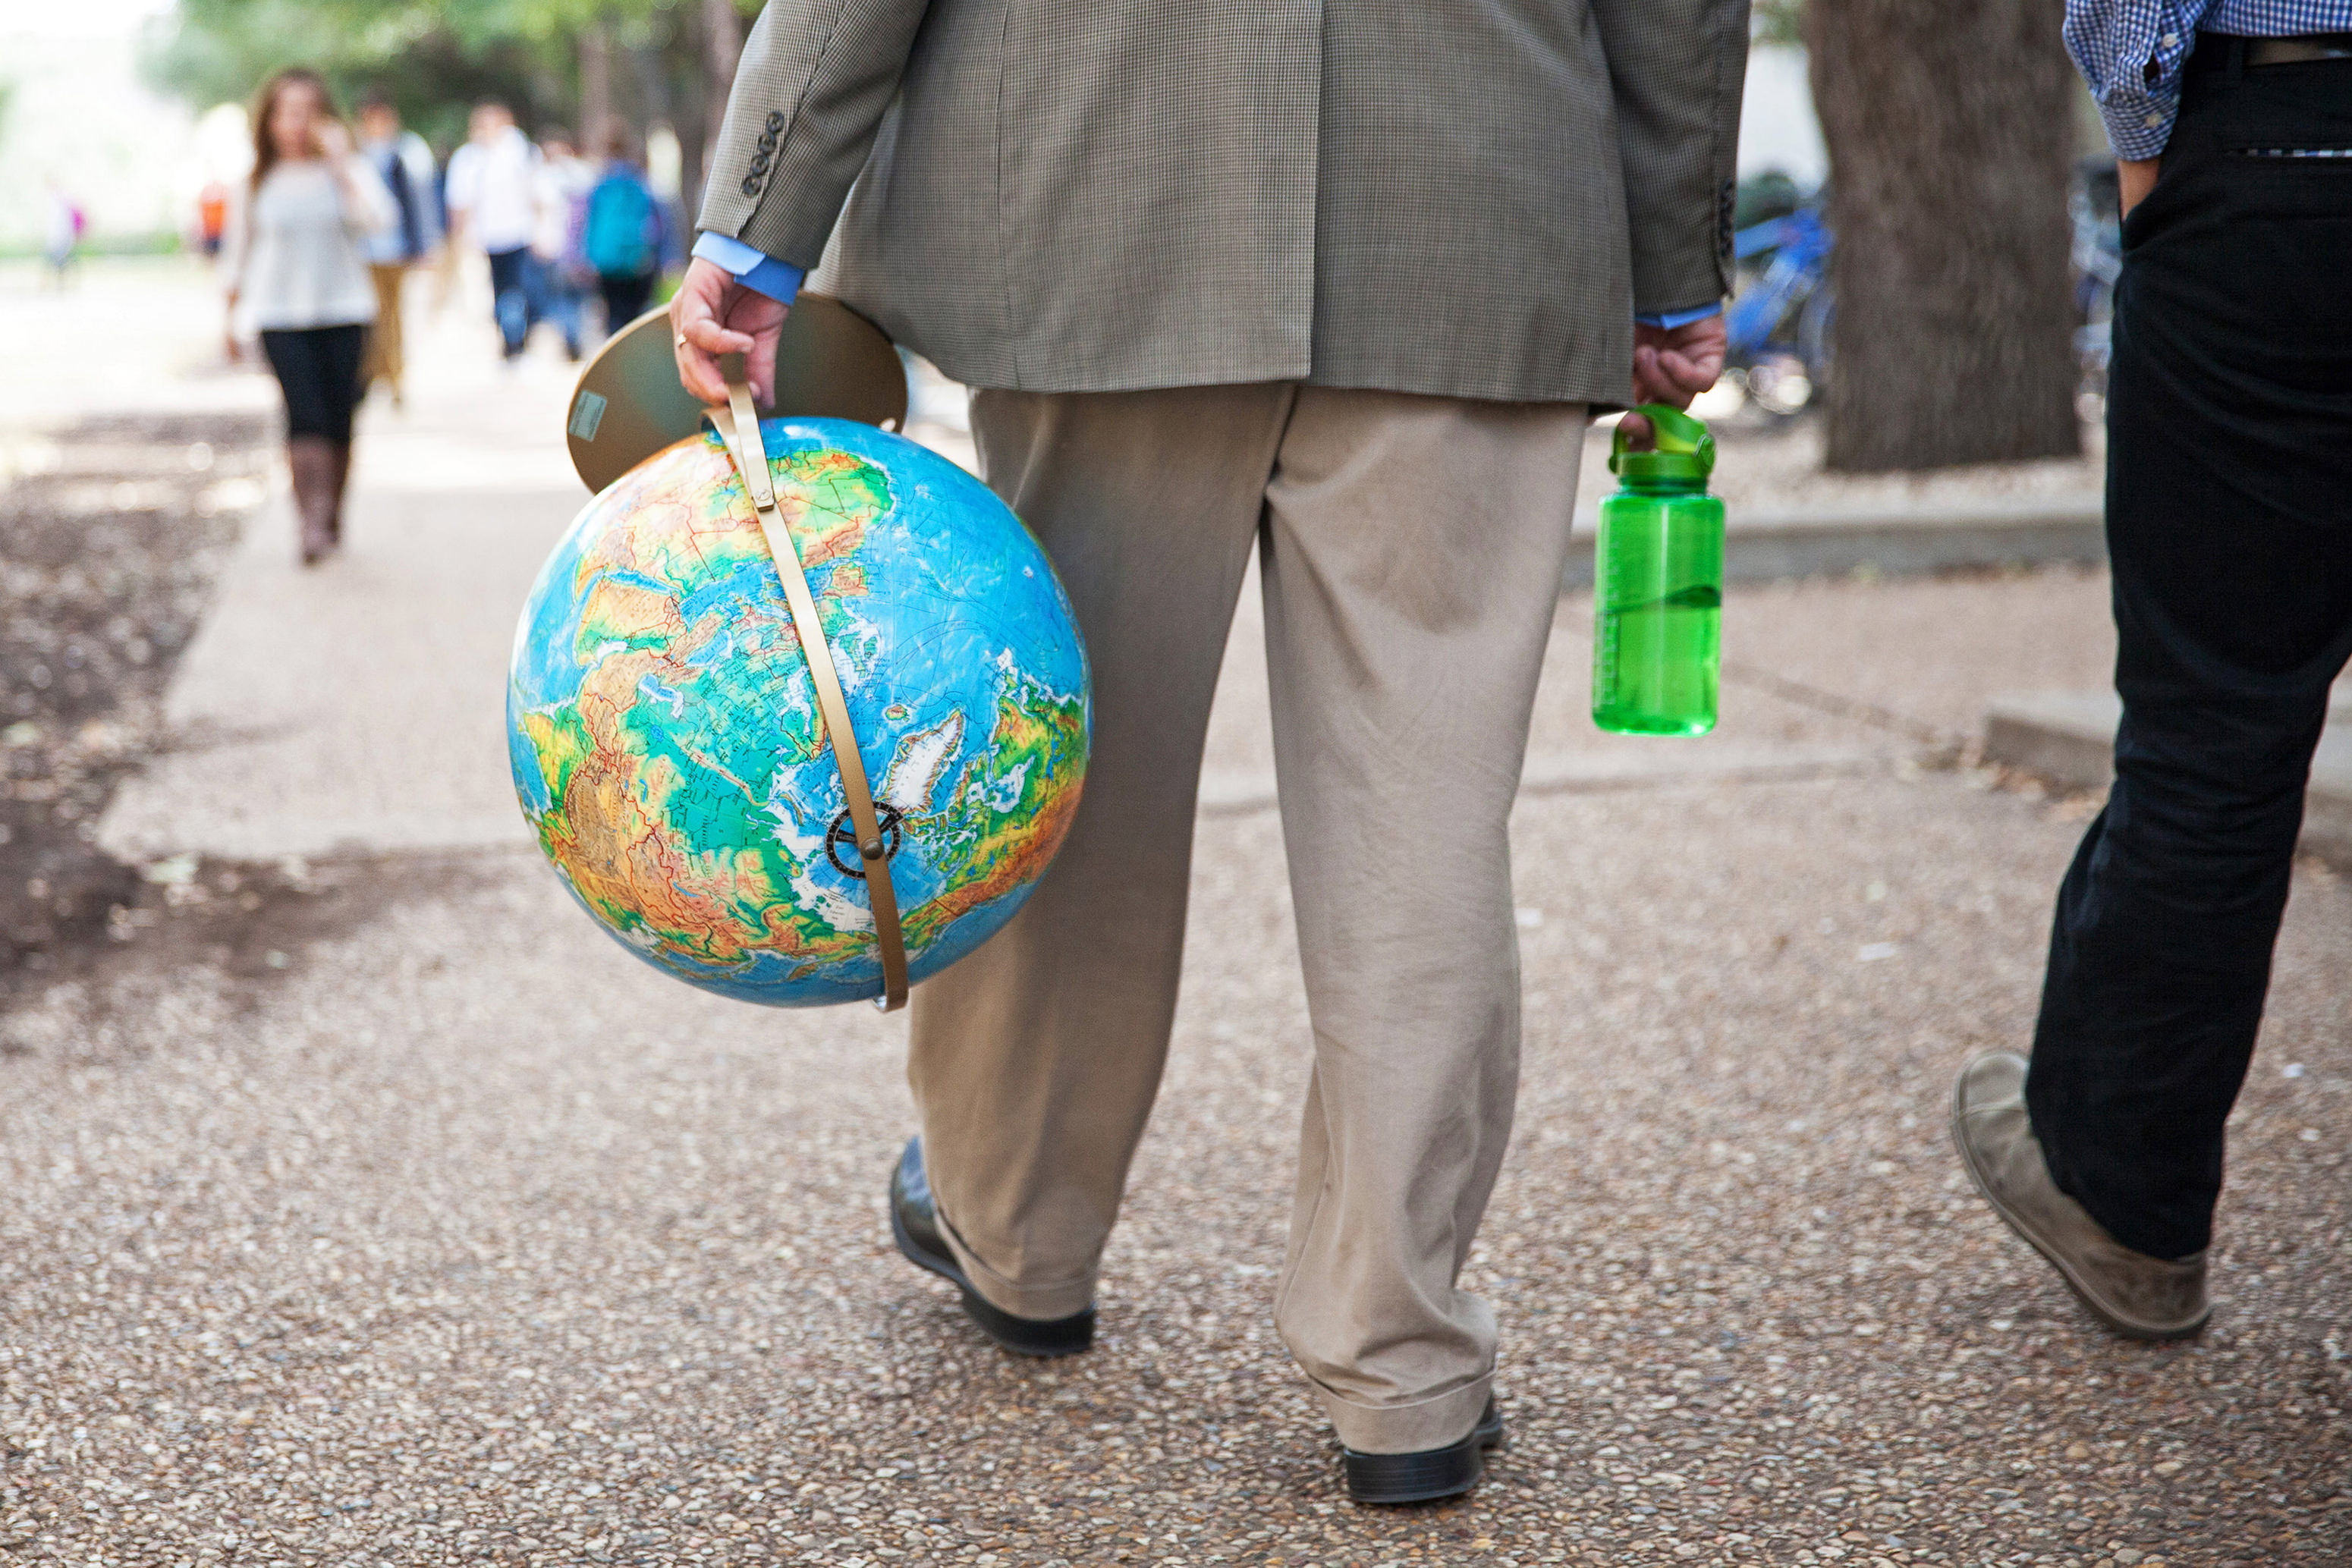 A professor walks through campus holding a globe